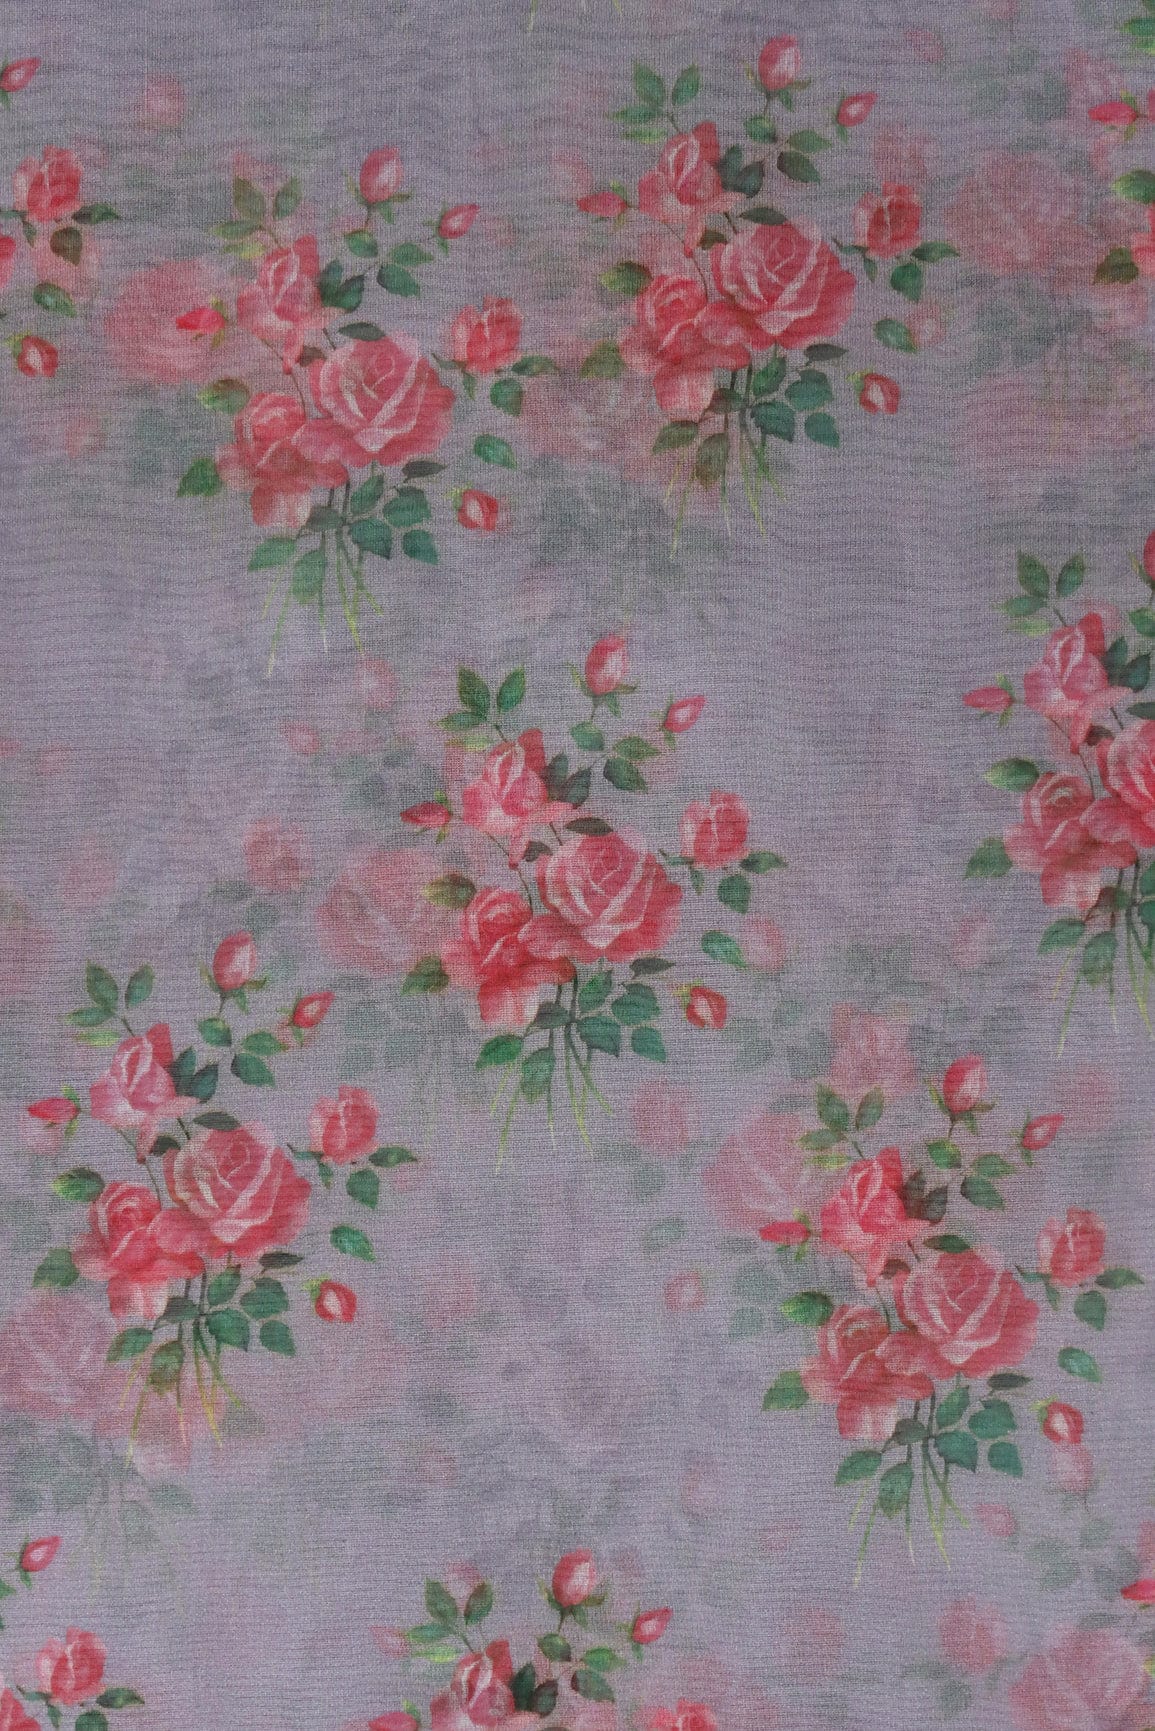 doeraa Prints Pink And Green Beautiful Floral Digital Print On Grey Organza Fabric